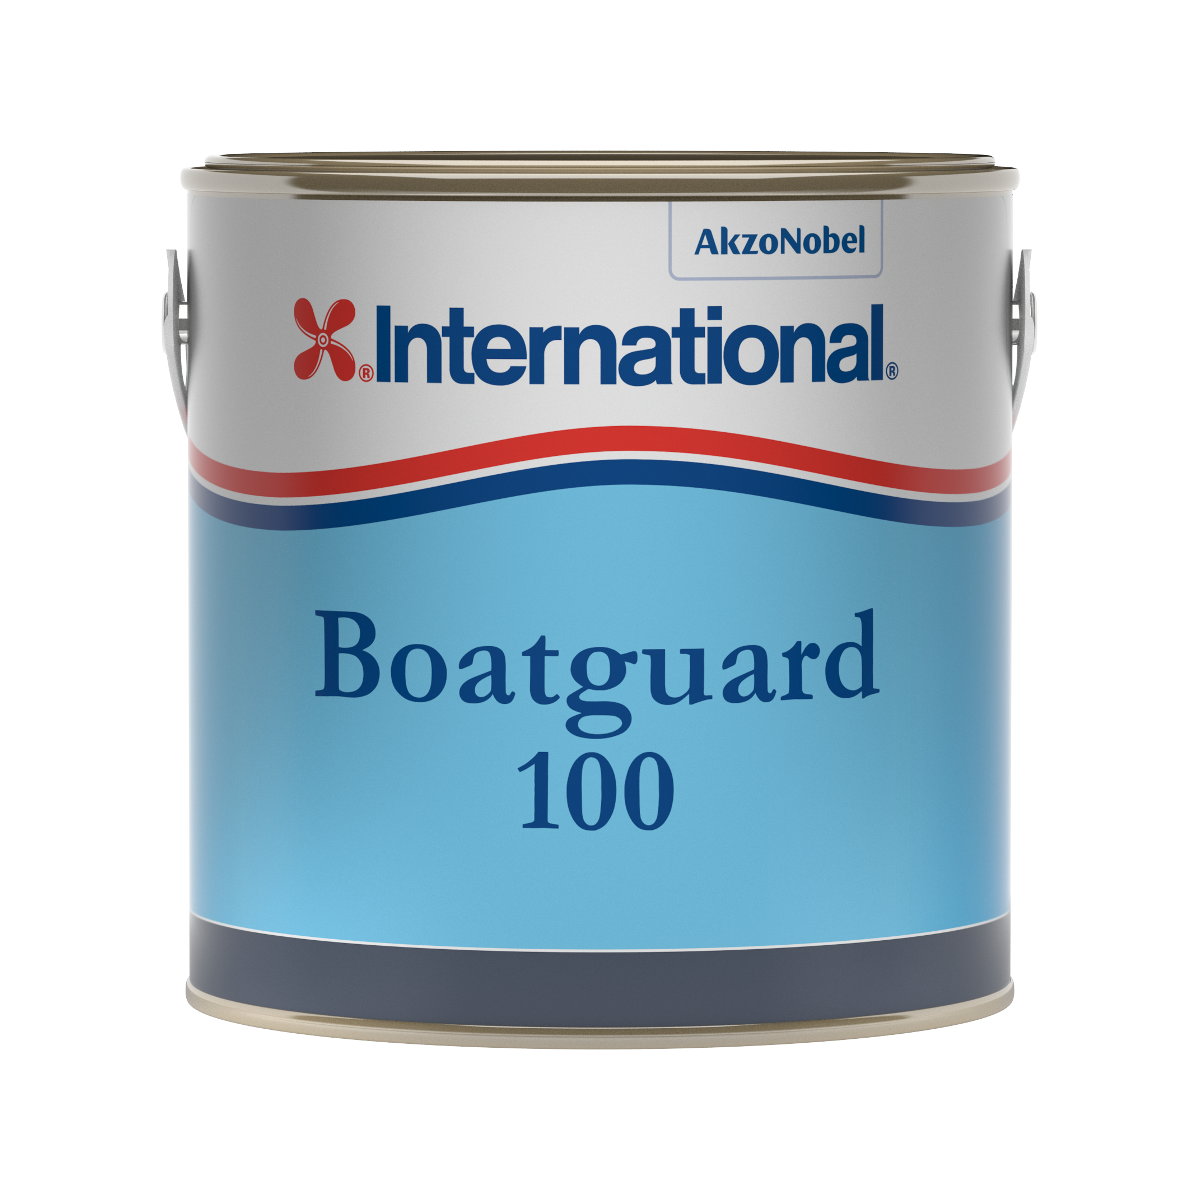 International Boatguard 100 antifouling - dover white, 2500ml